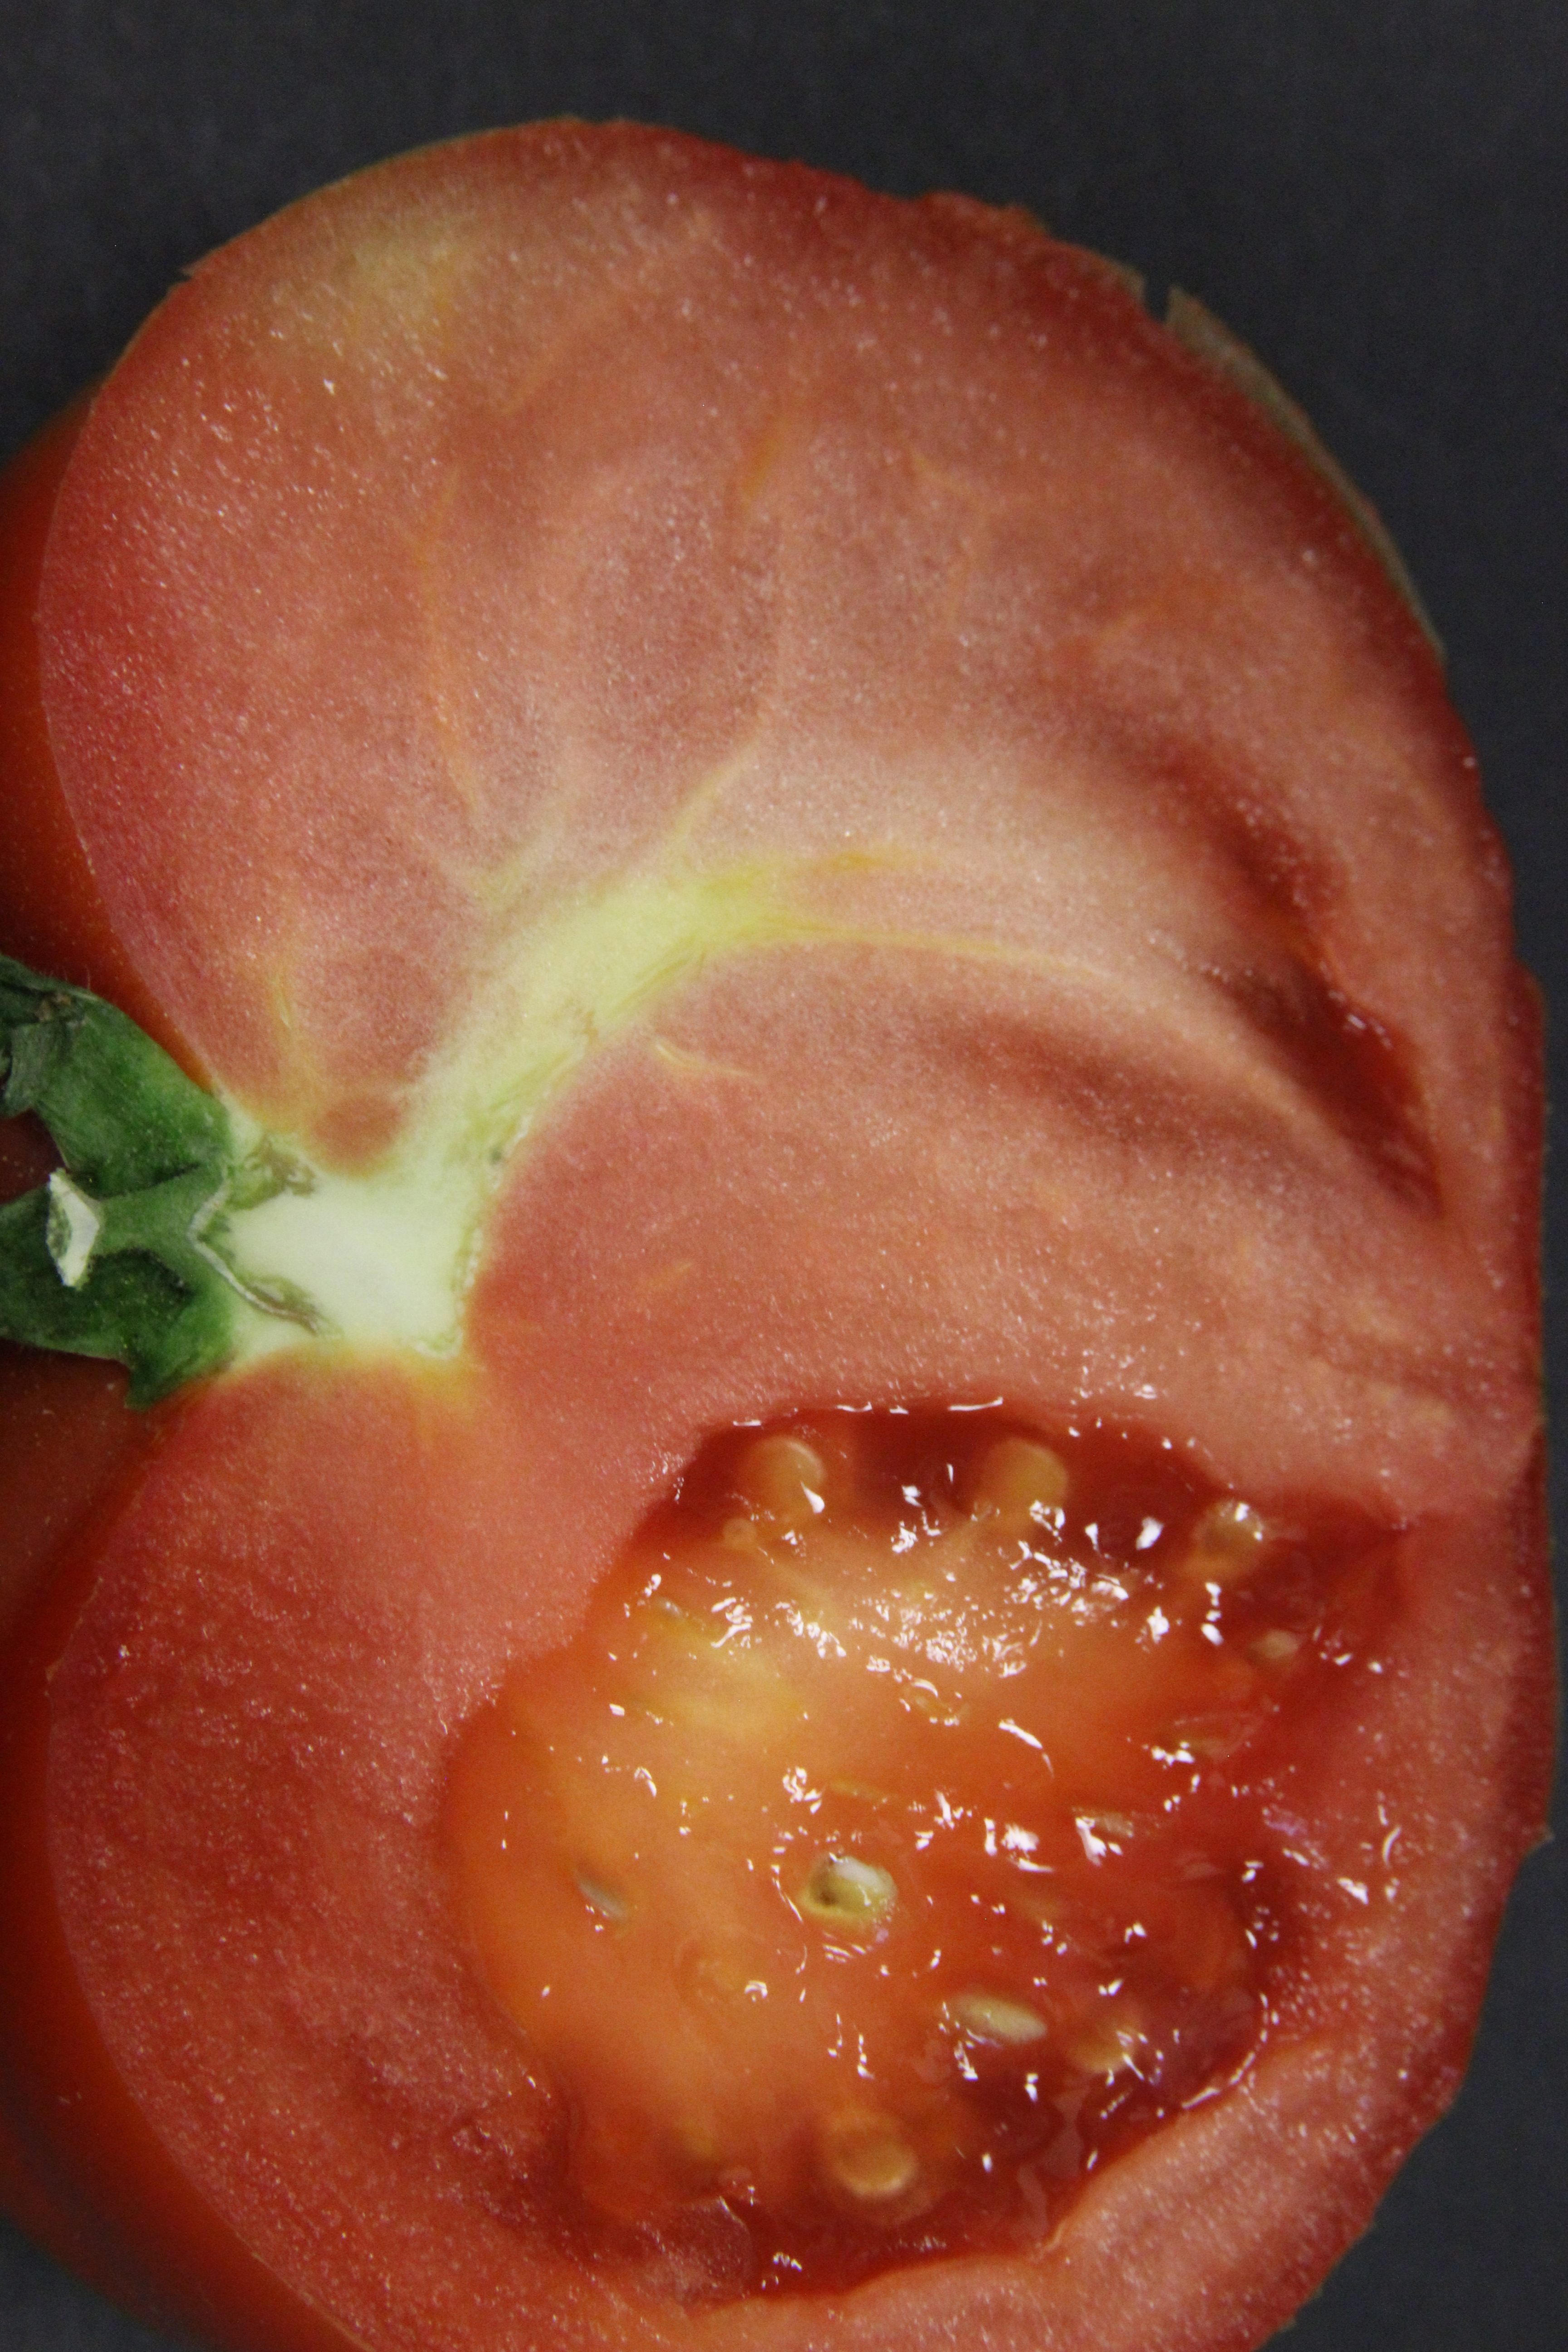 Internal green core on tomato